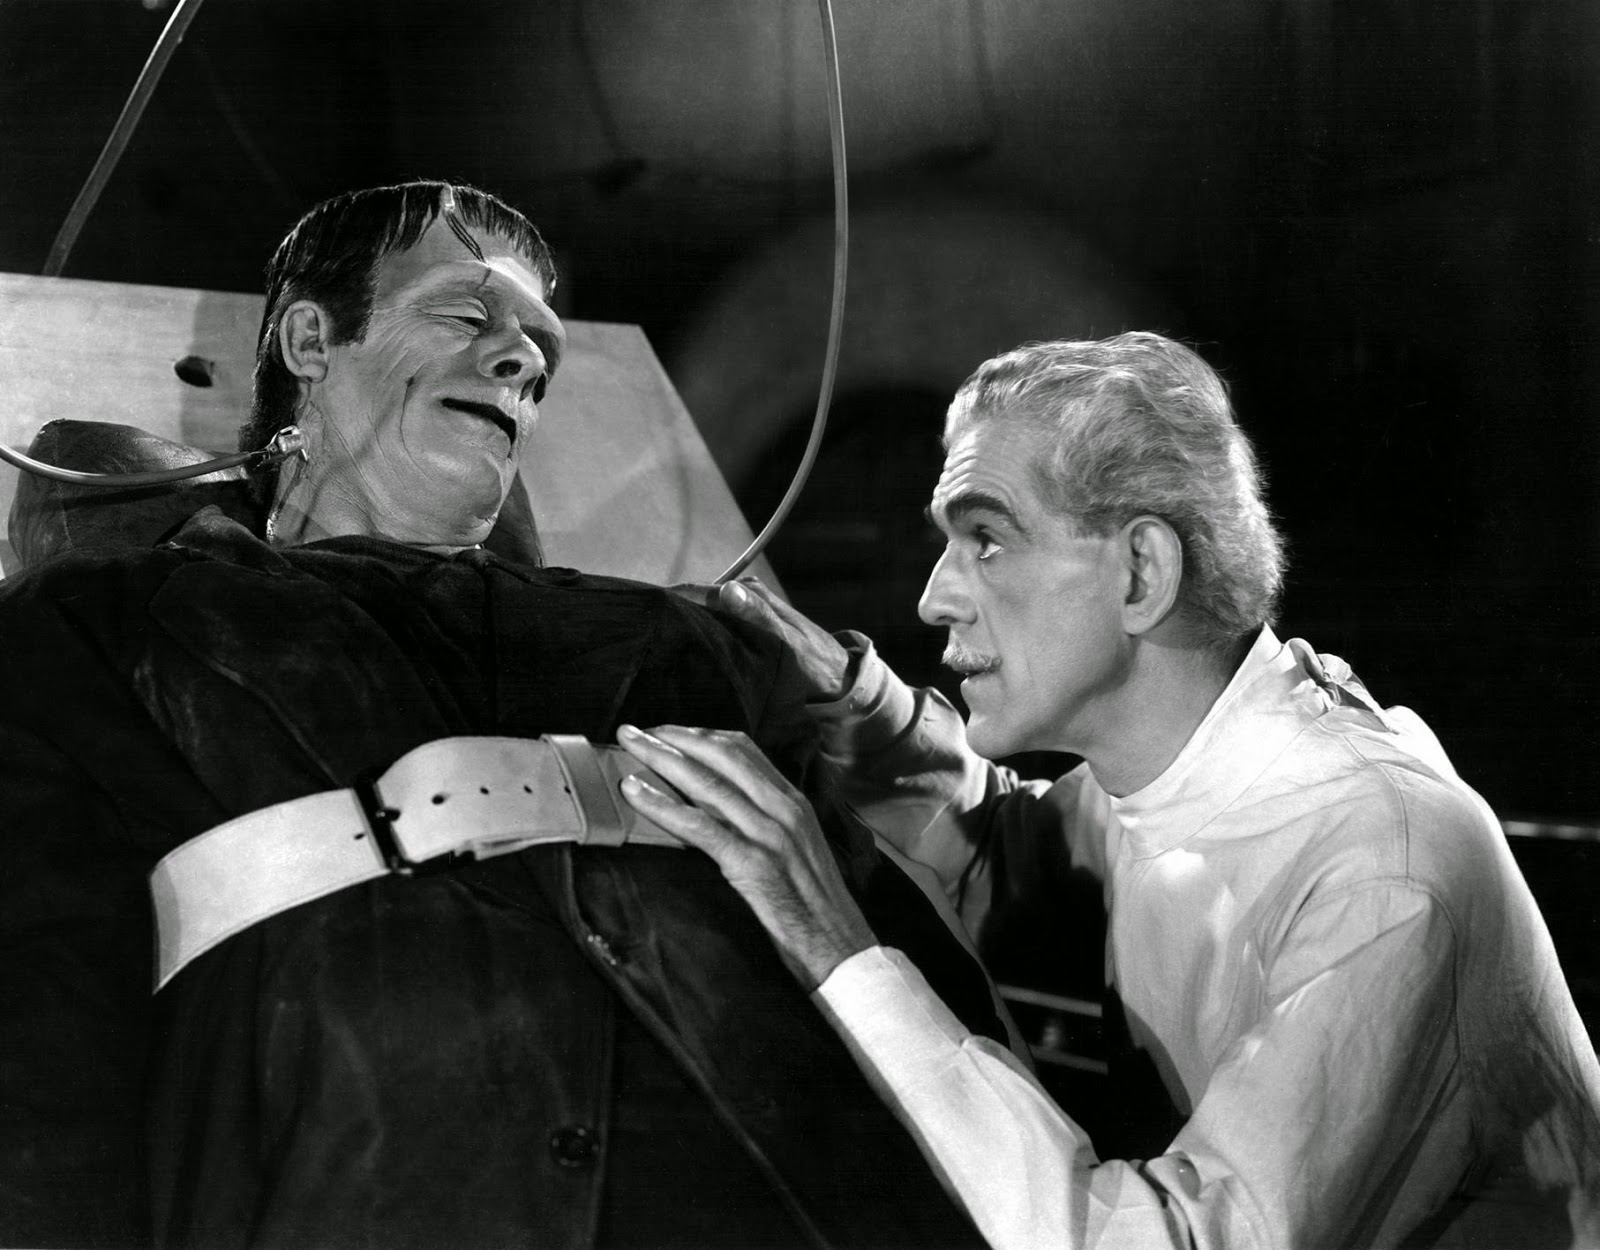 Frankenstein's monster Story, Victor Frankenstein and his creature